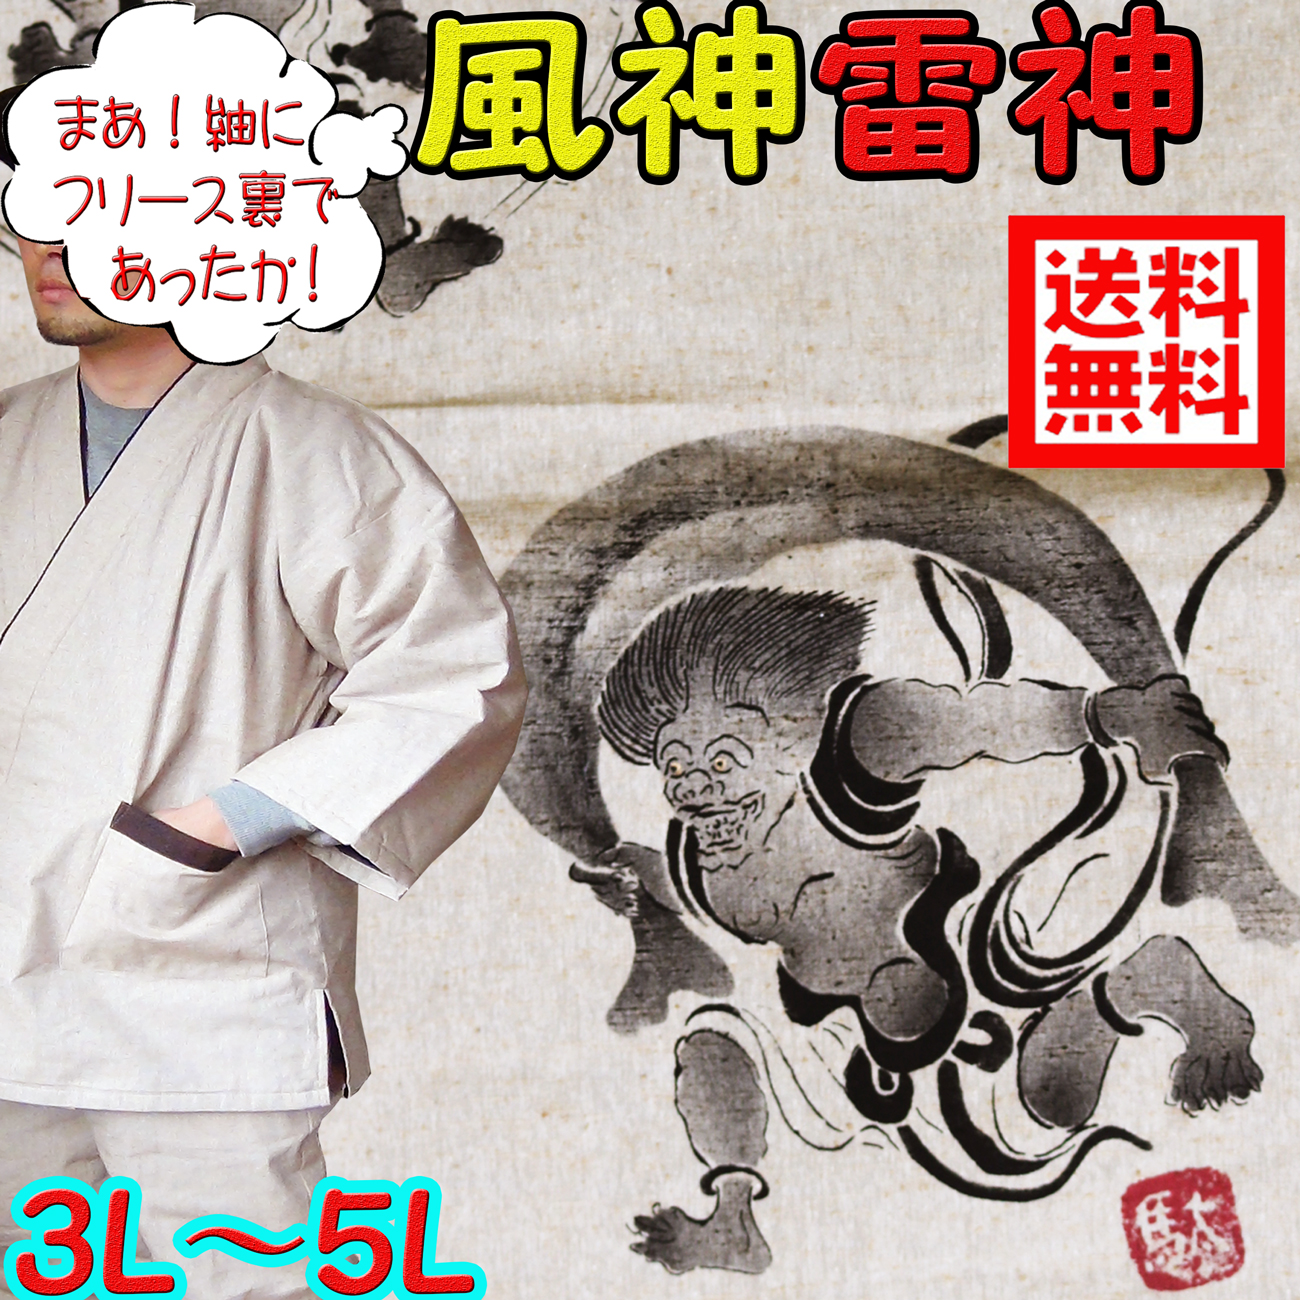 141-19017-k-huujin,大きいサイズのﾌﾘｰｽ裏に描かれた風神雷神、3L,4L,5L